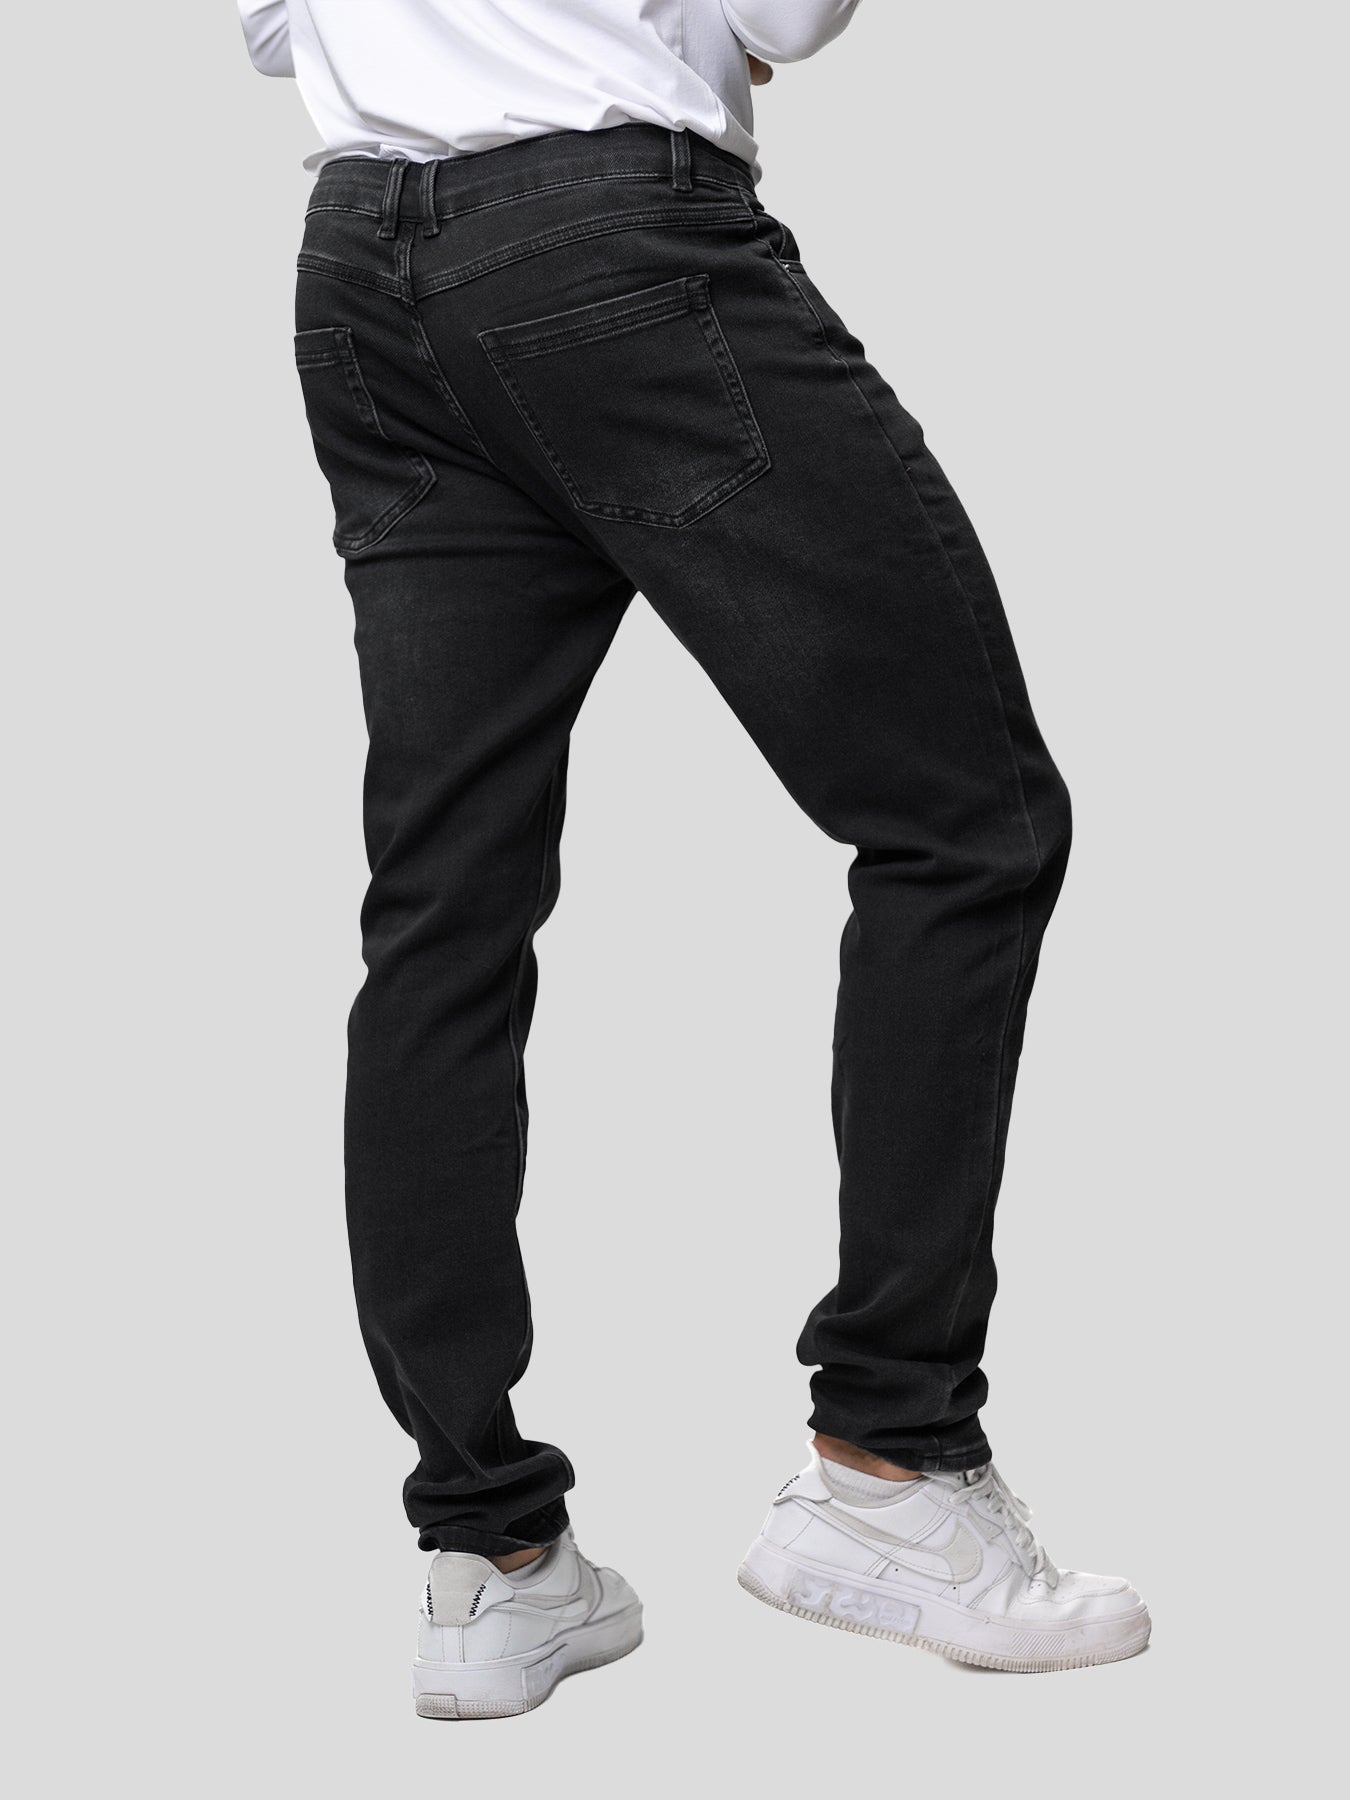 Fioboc Men's High Stretch Jeans Classic Pants